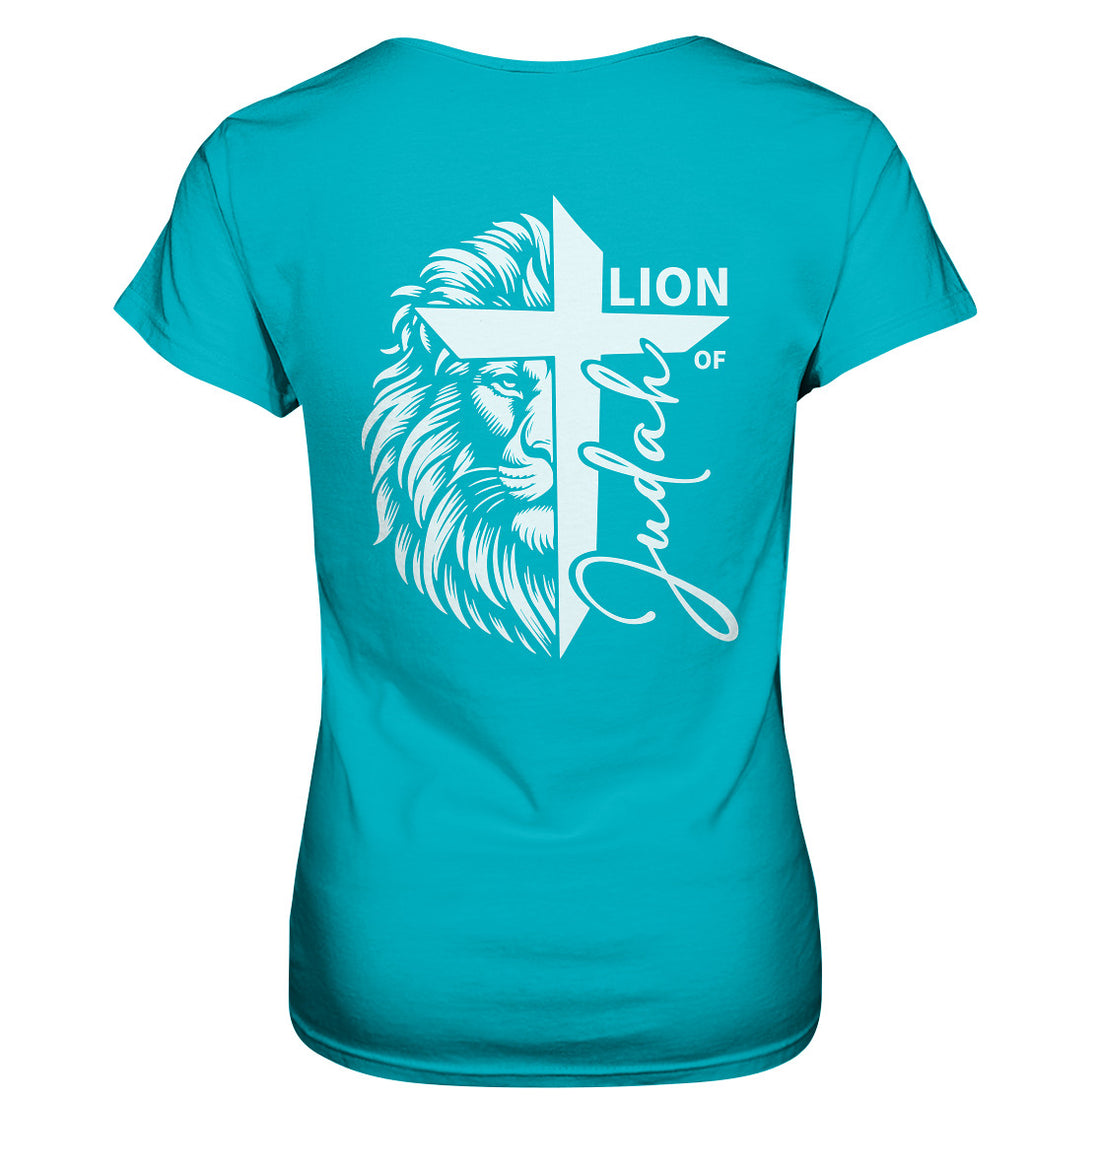 Offb 5,5 - Lion of Judah - Cross - Ladies Premium Shirt